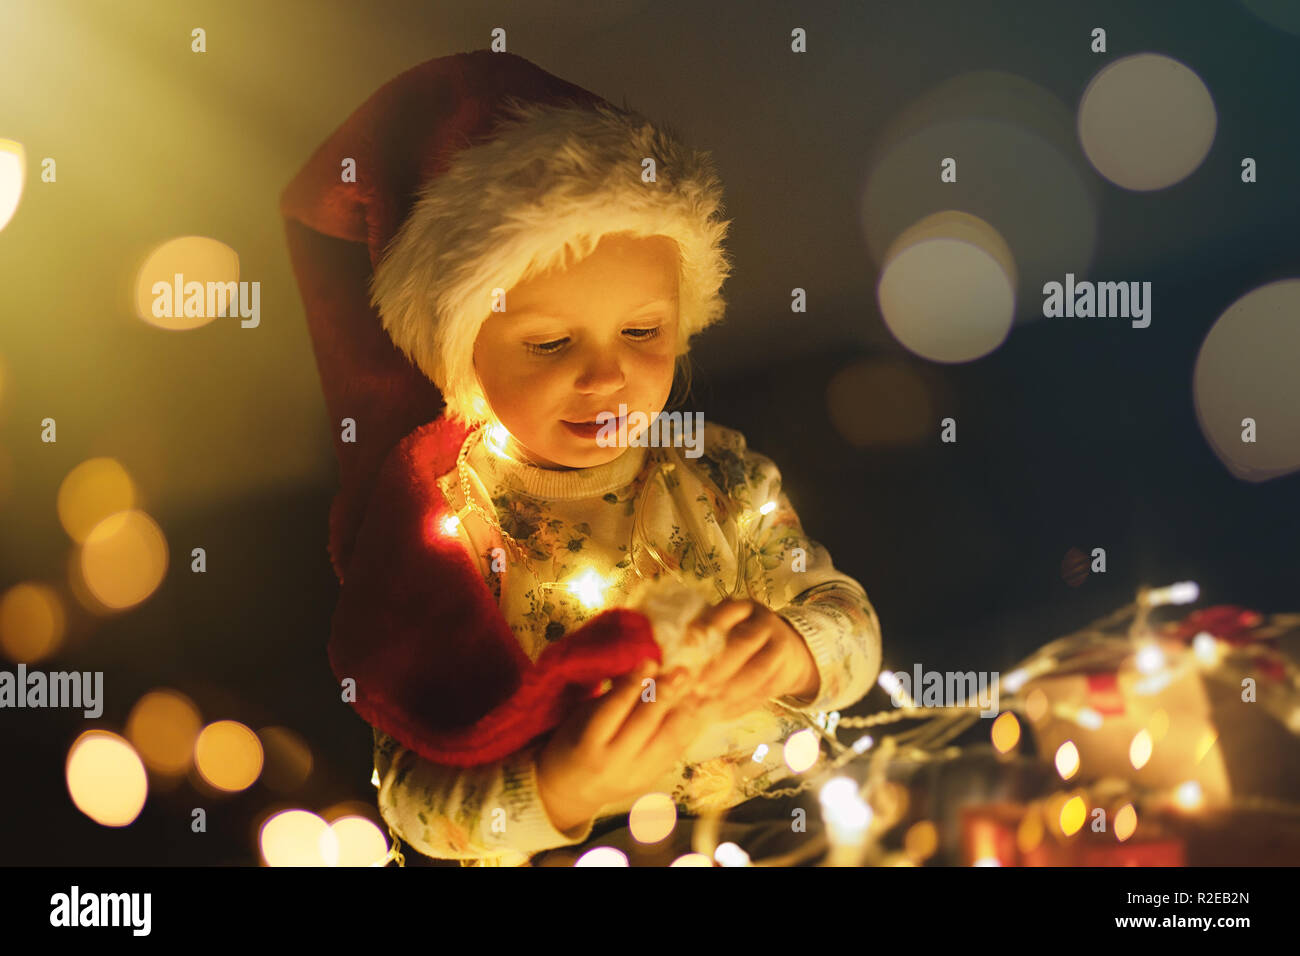 Baby girl opening Christmas presents Stock Photo